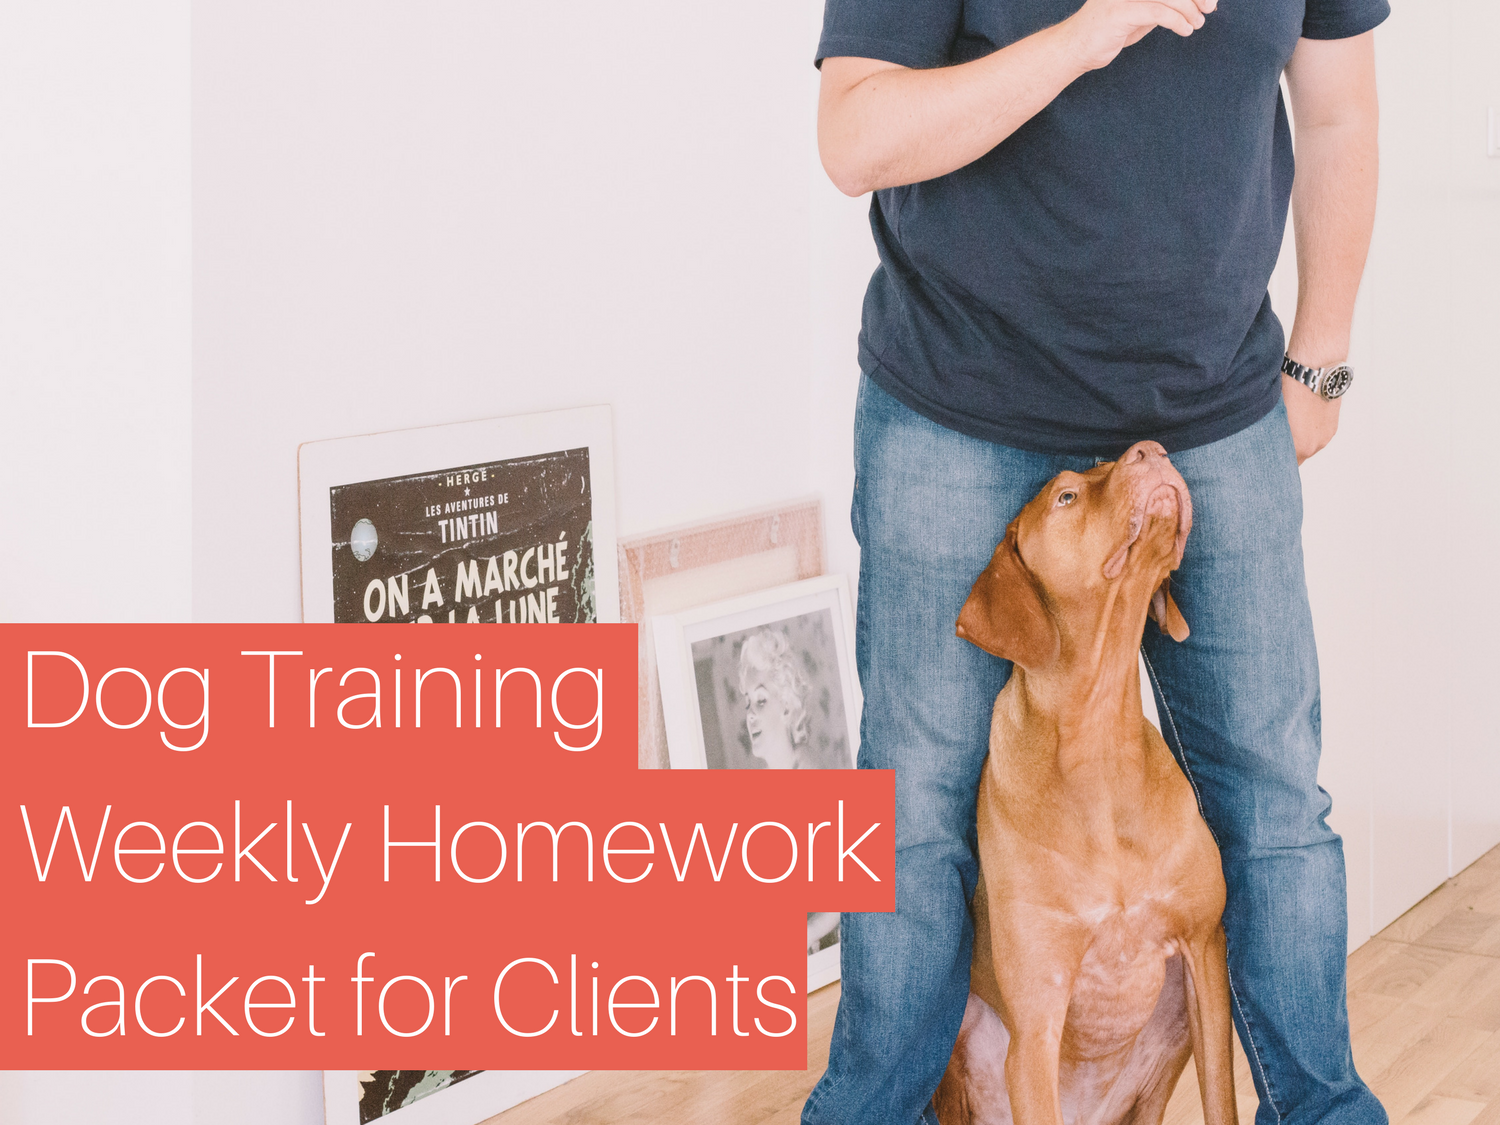 dog training business plan template